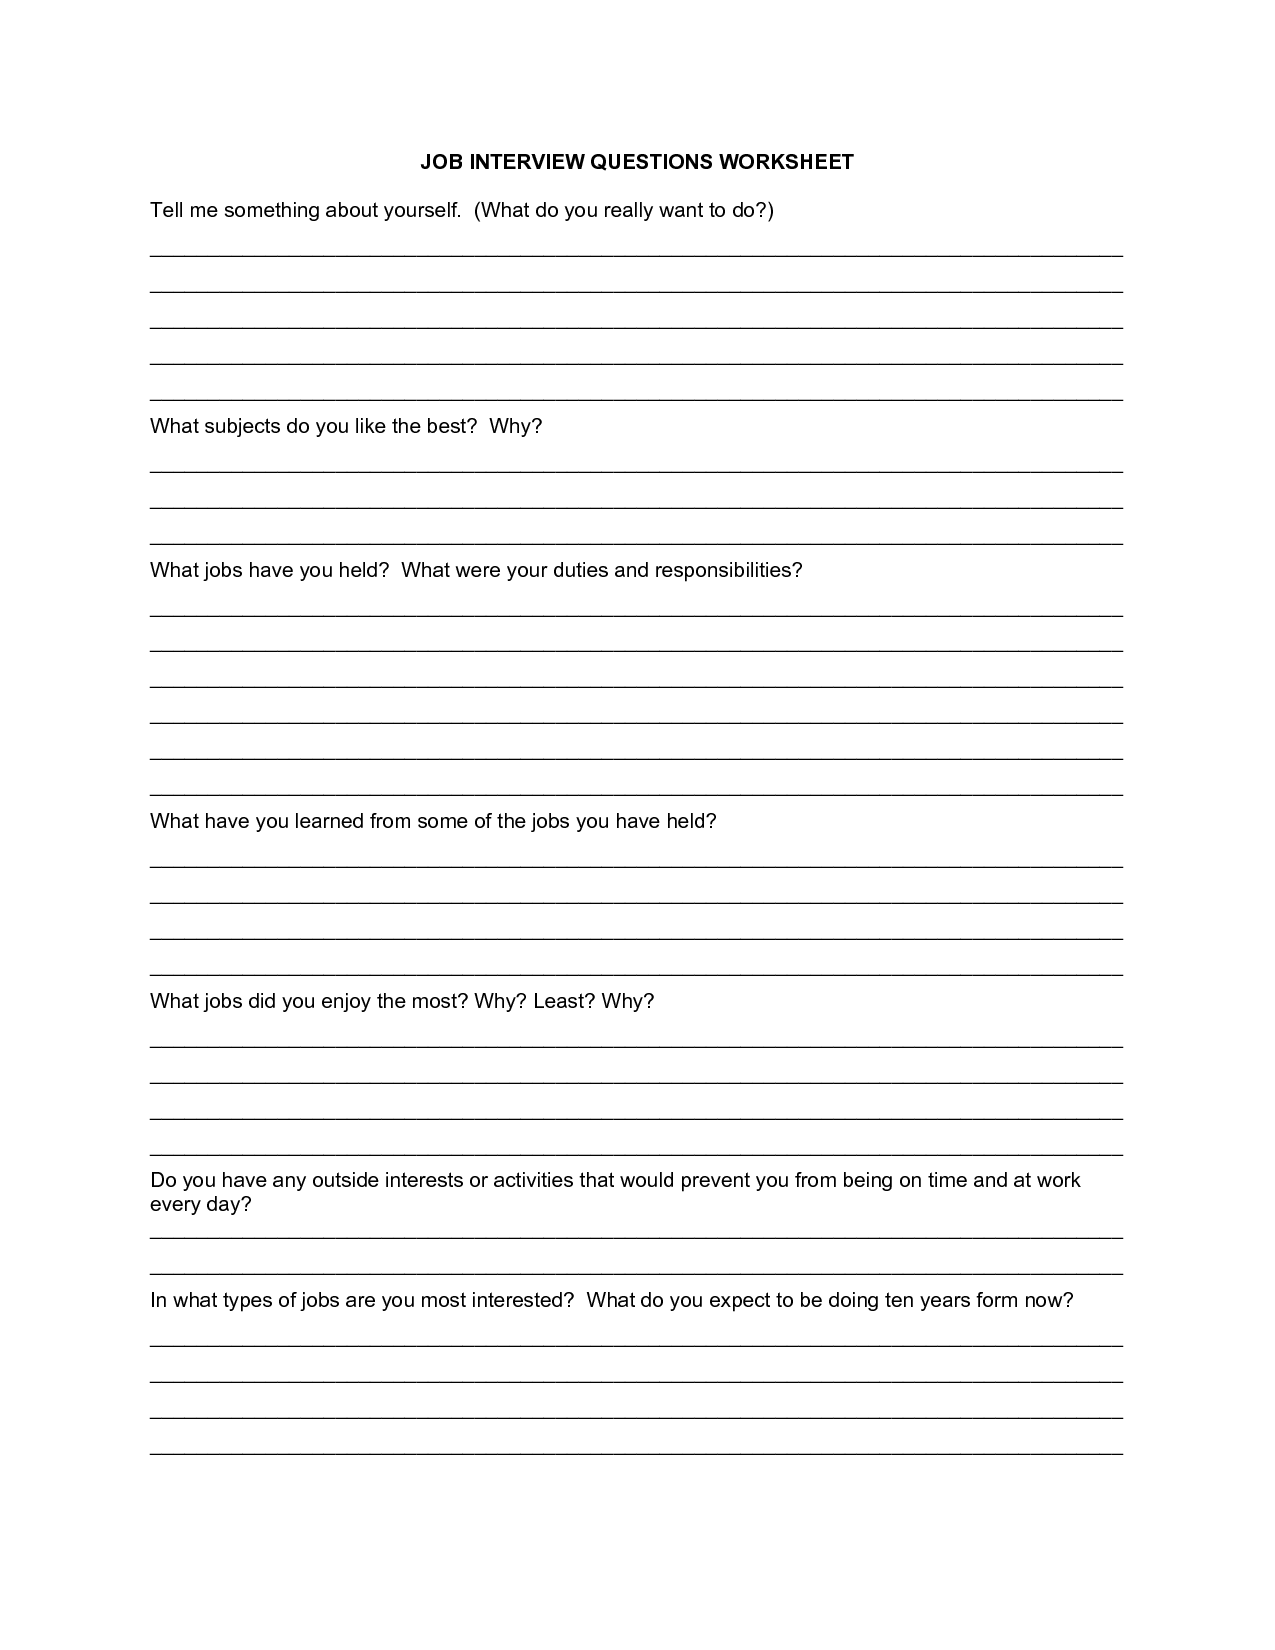 Job Interview Questions Worksheet Image